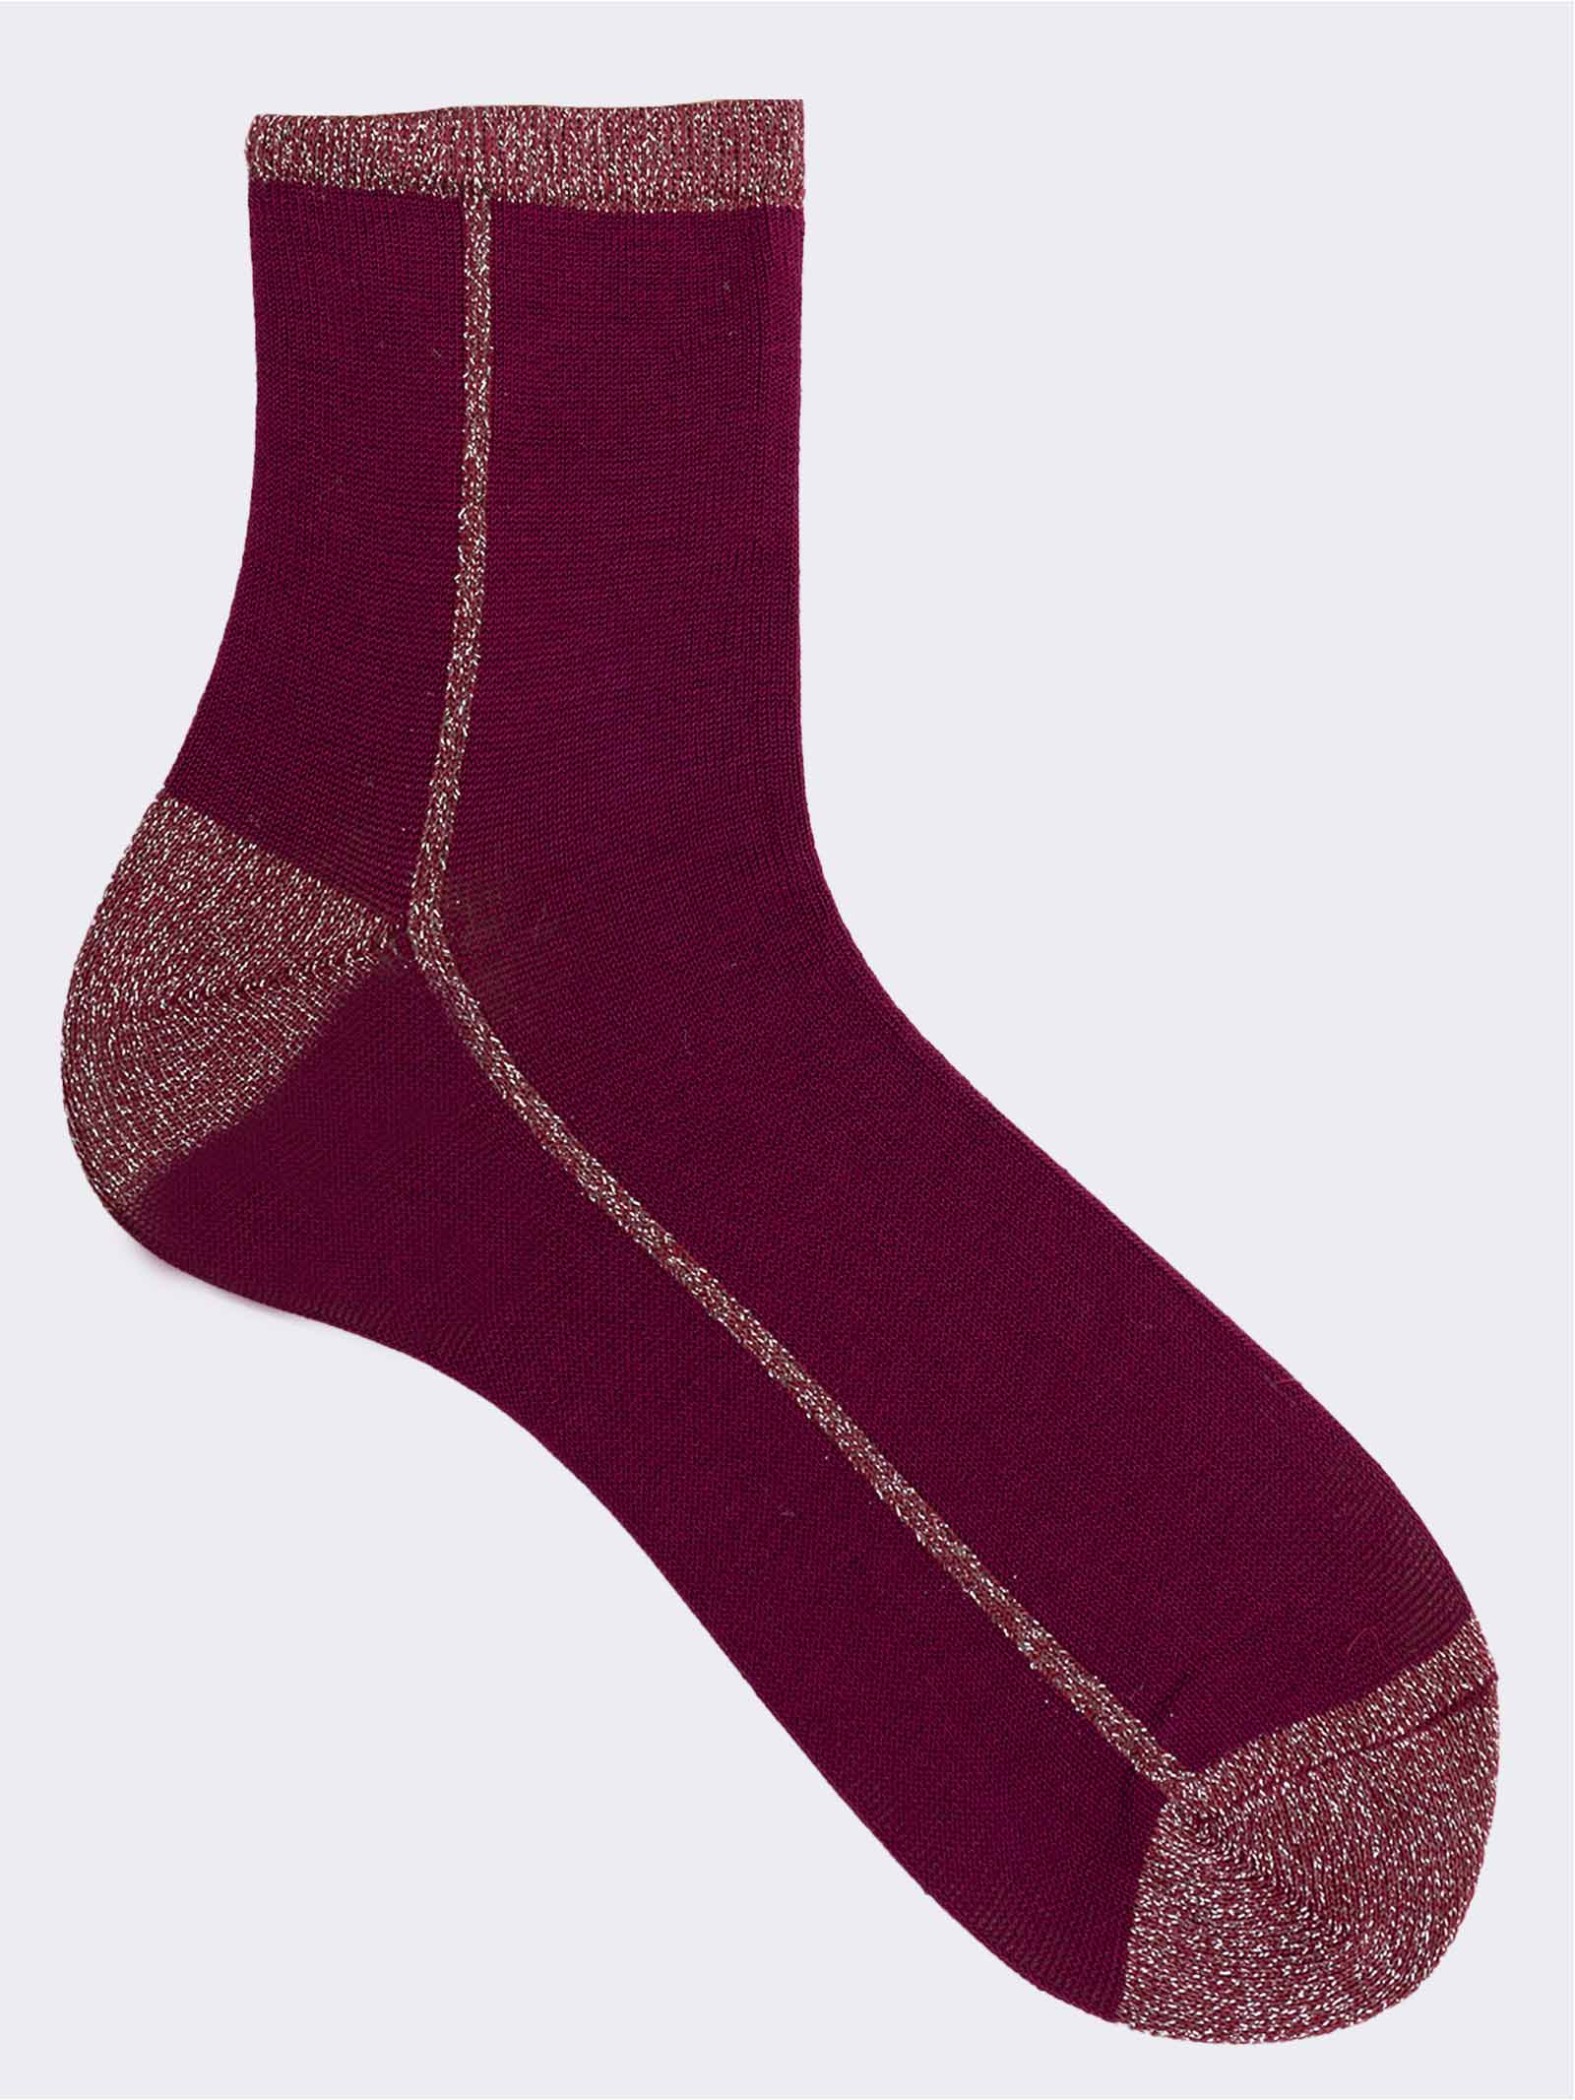 Crew lurex patterned socks